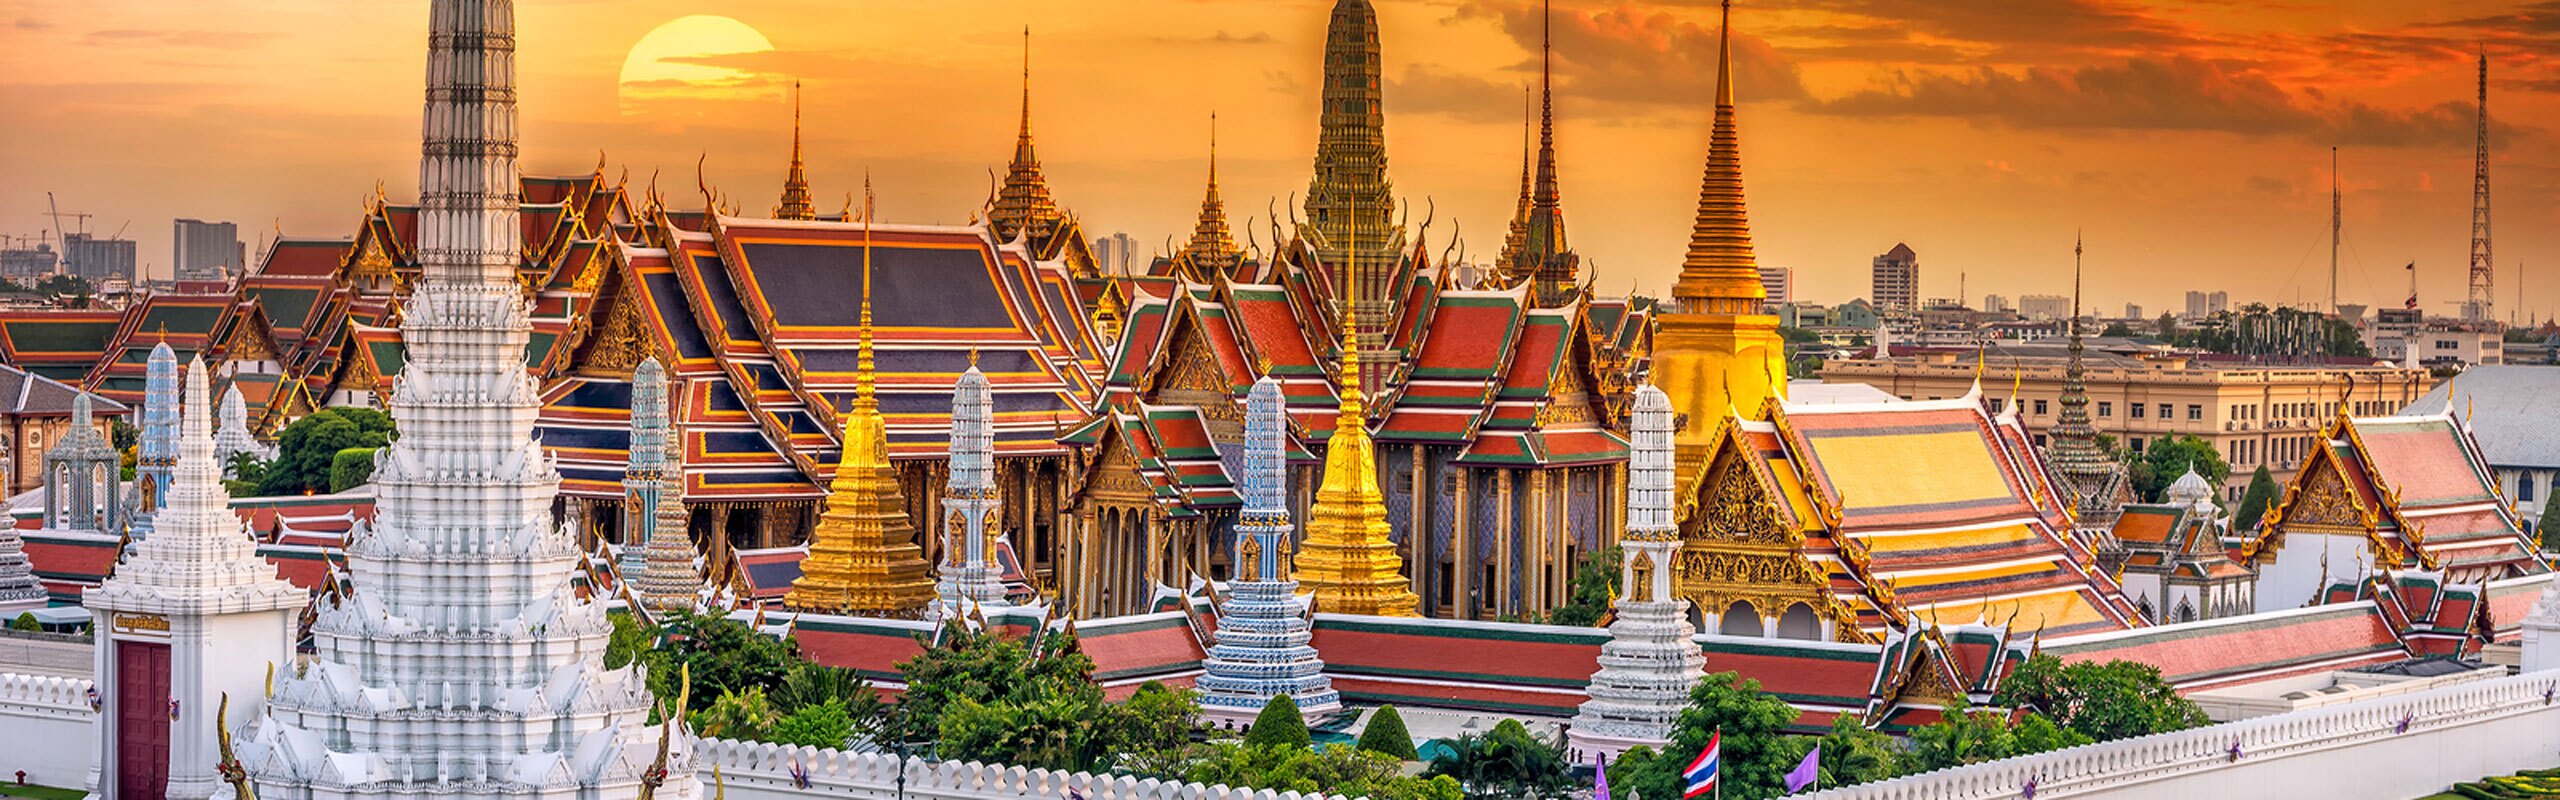 Thailand Travel Guide: Customize a Unique Personalized Trip